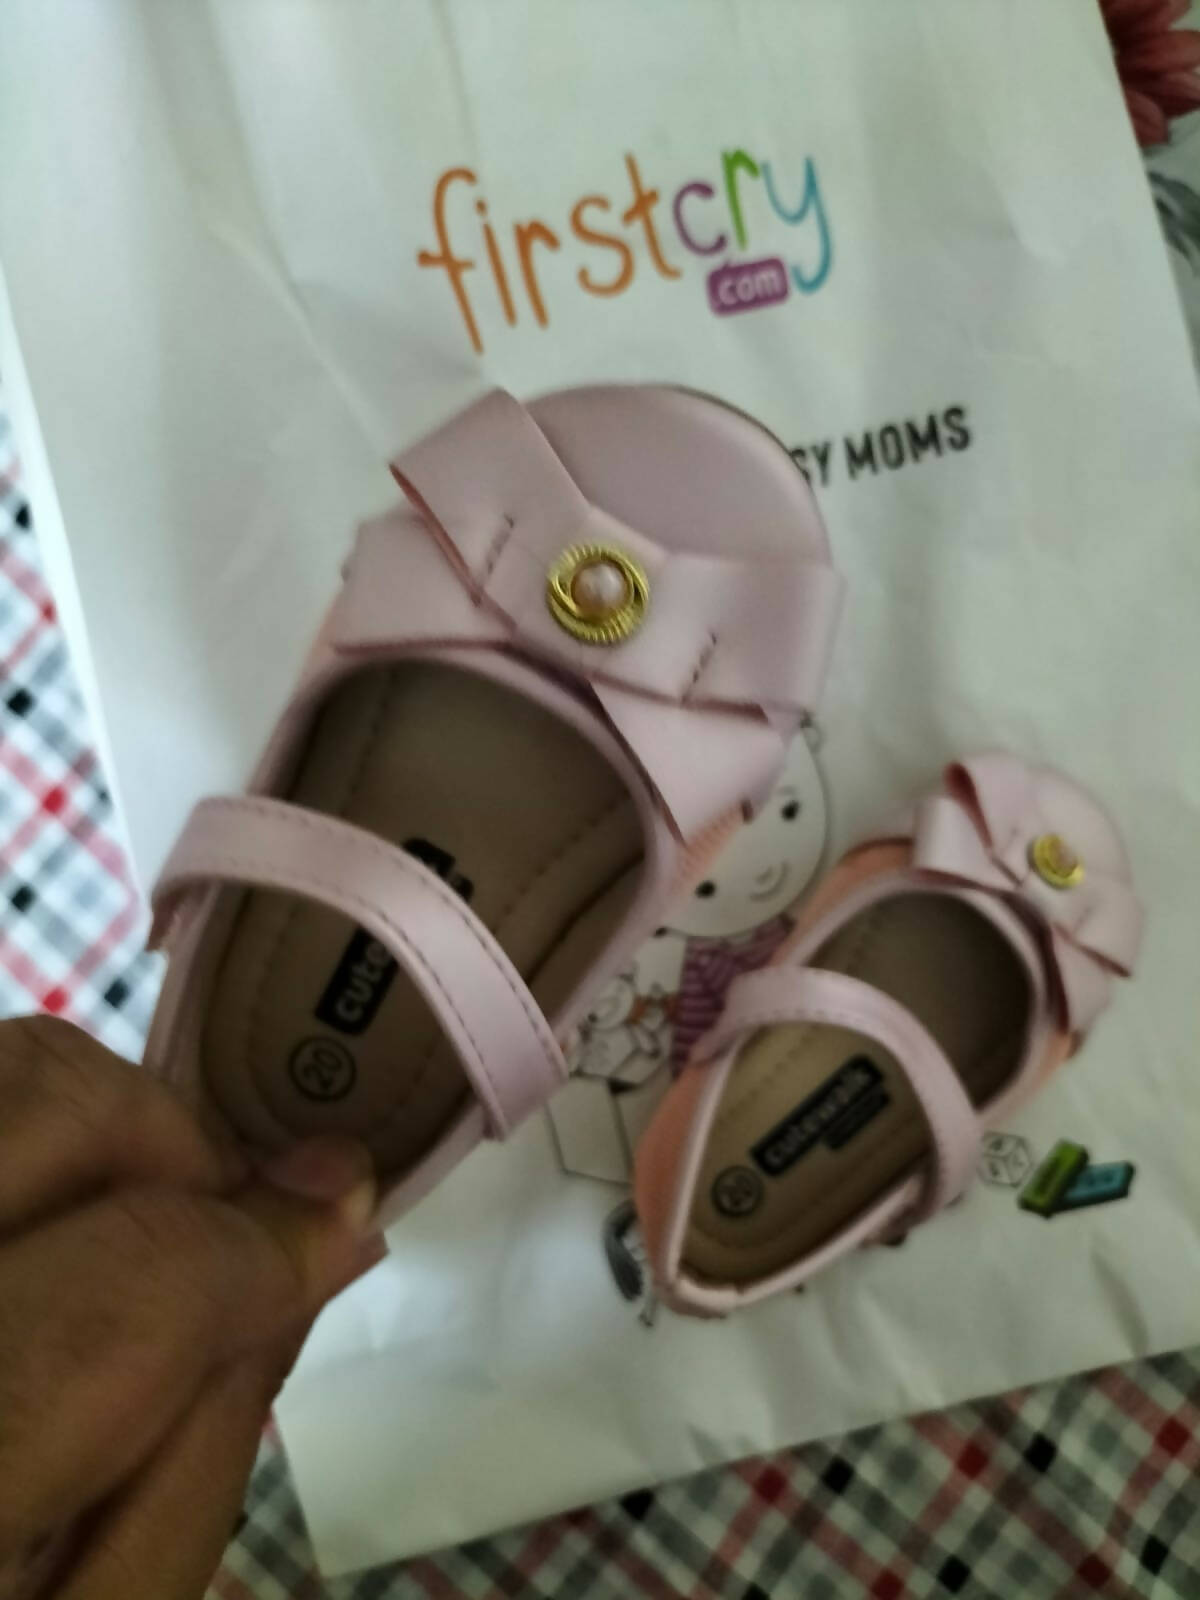 CUTEWALK Belly/Footwear for Baby Girl